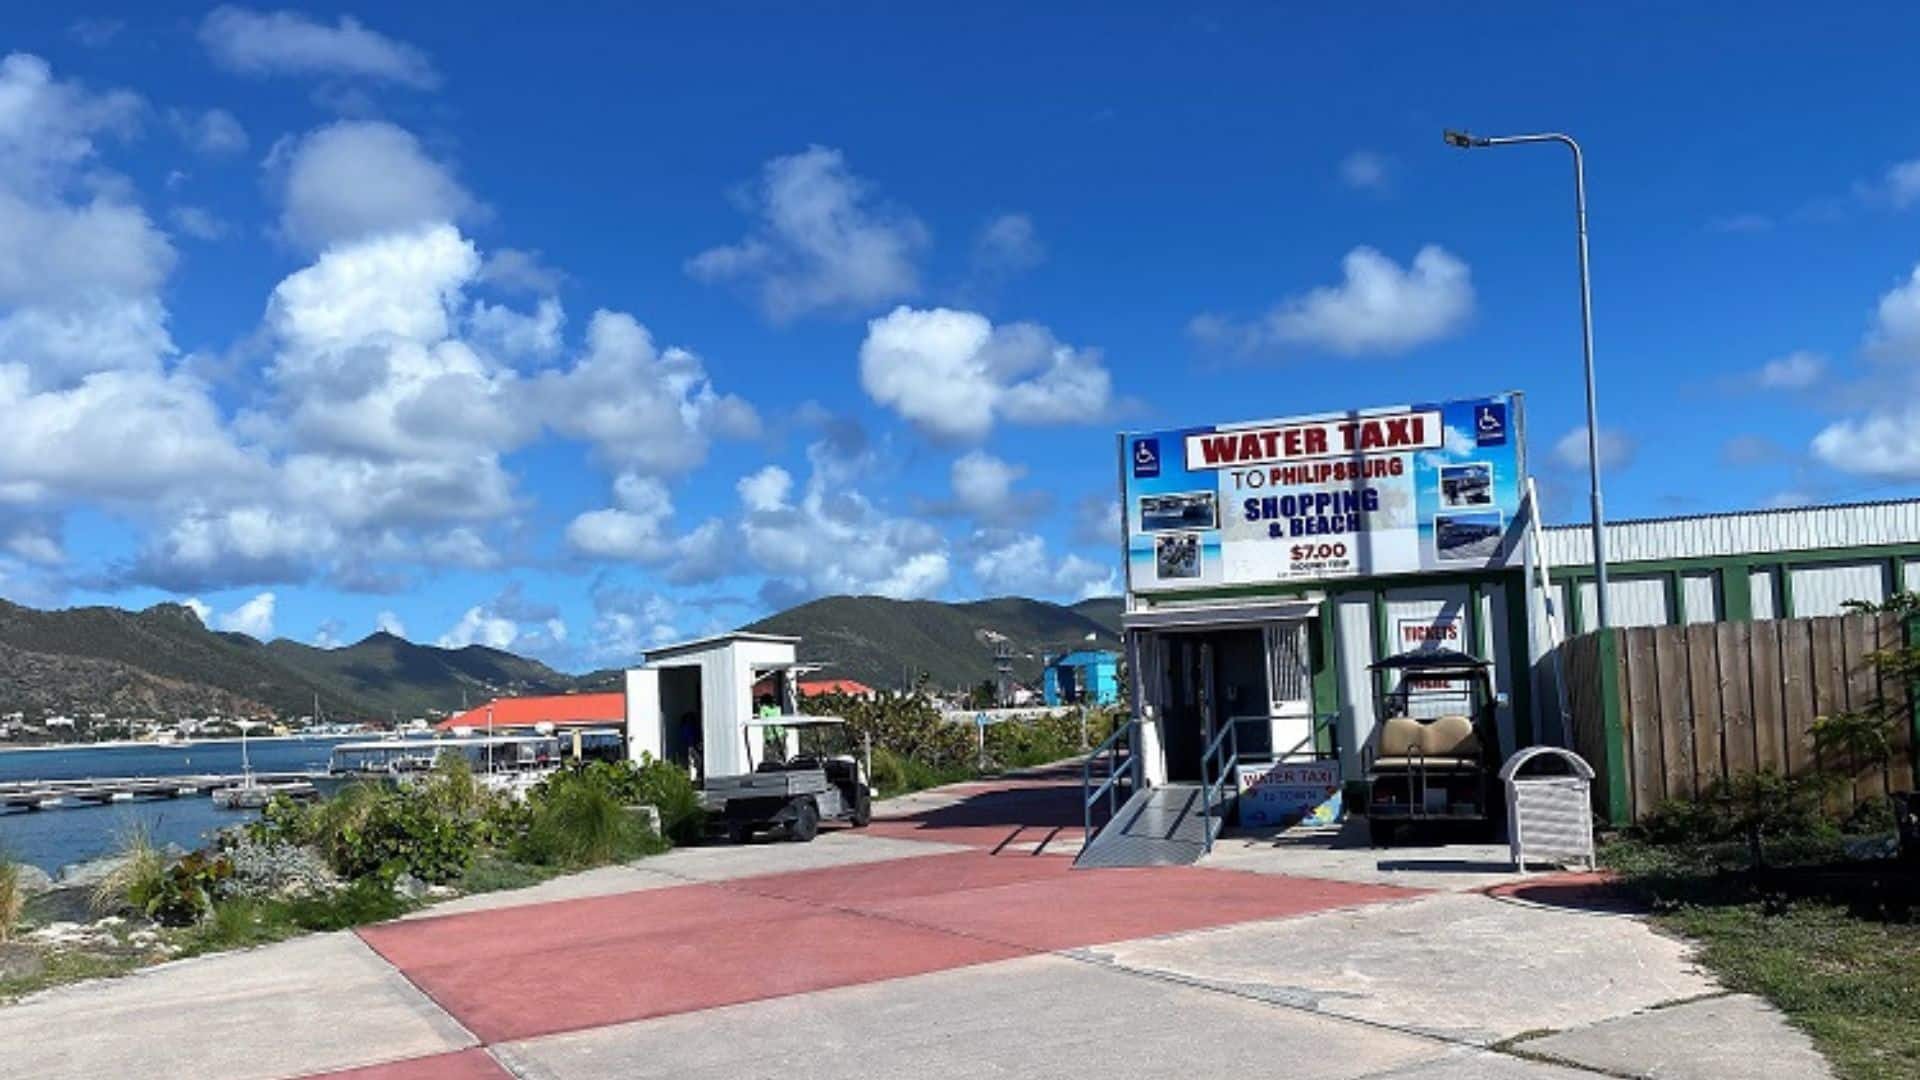 St Maarten cruise port and things to do near Philipsburg St. Maarten